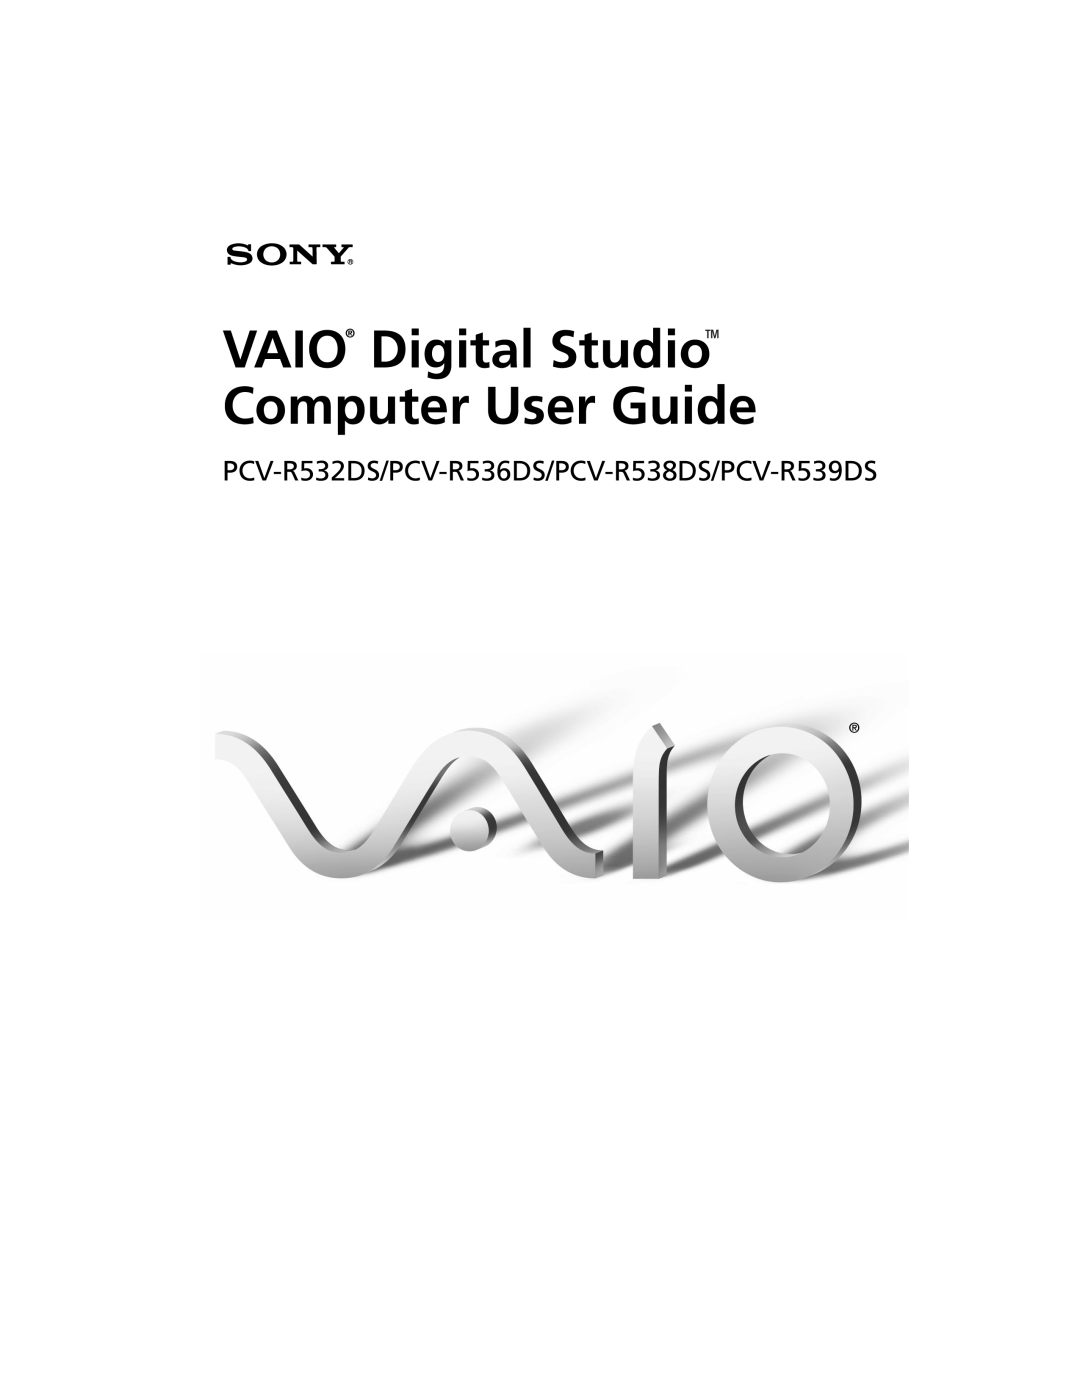 Sony manual VAIO Digital StudioTM Computer User Guide, PCV-R532DS/PCV-R536DS/PCV-R538DS/PCV-R539DS 